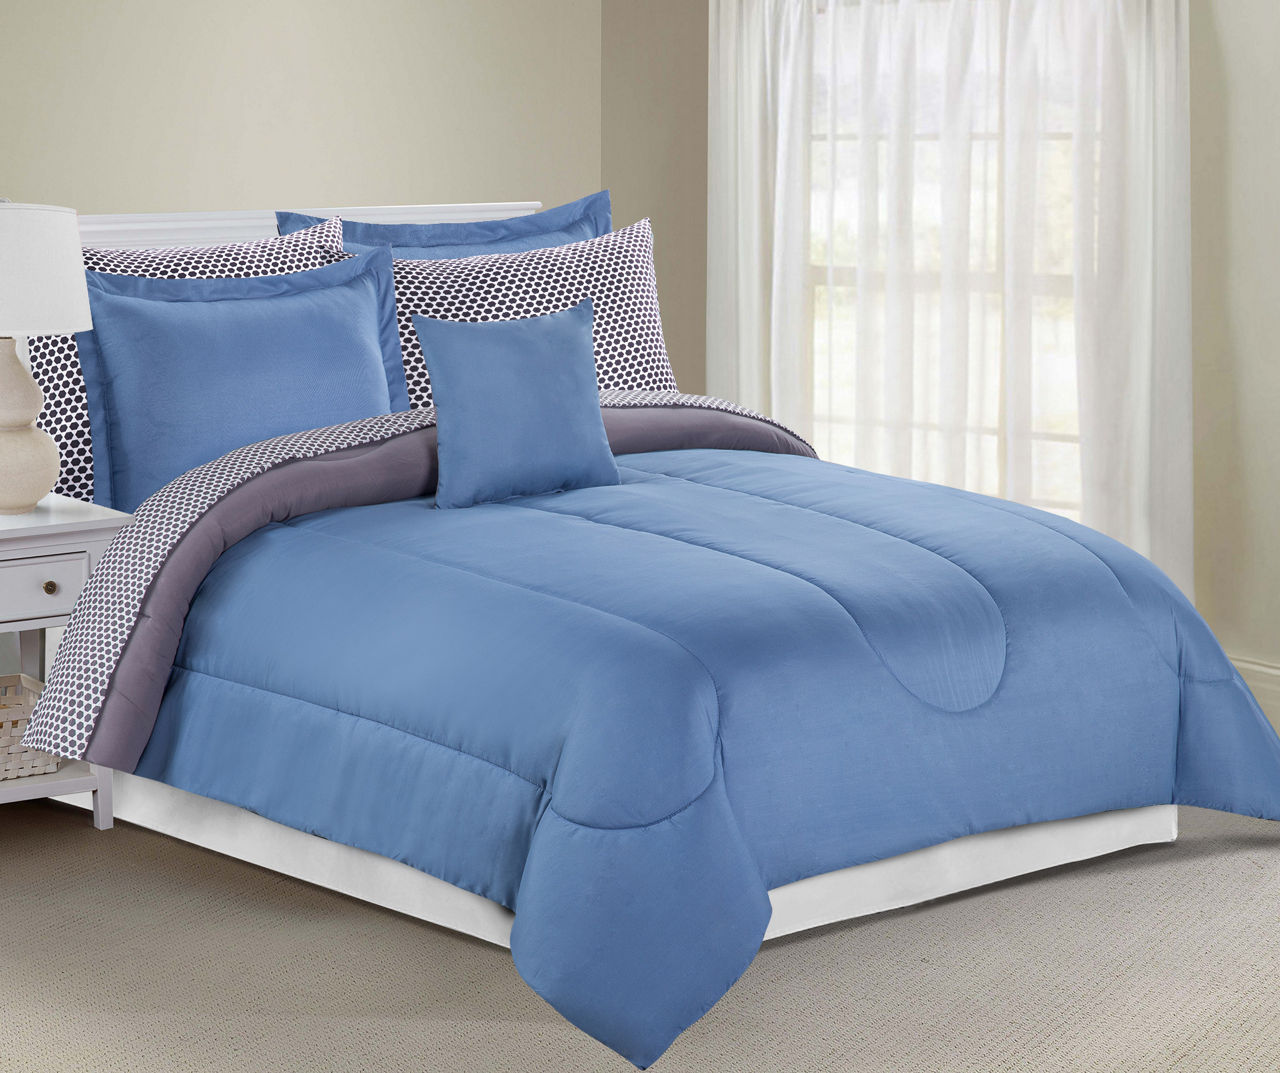 Solid Blue & Gray Full 8-Piece Comforter Set